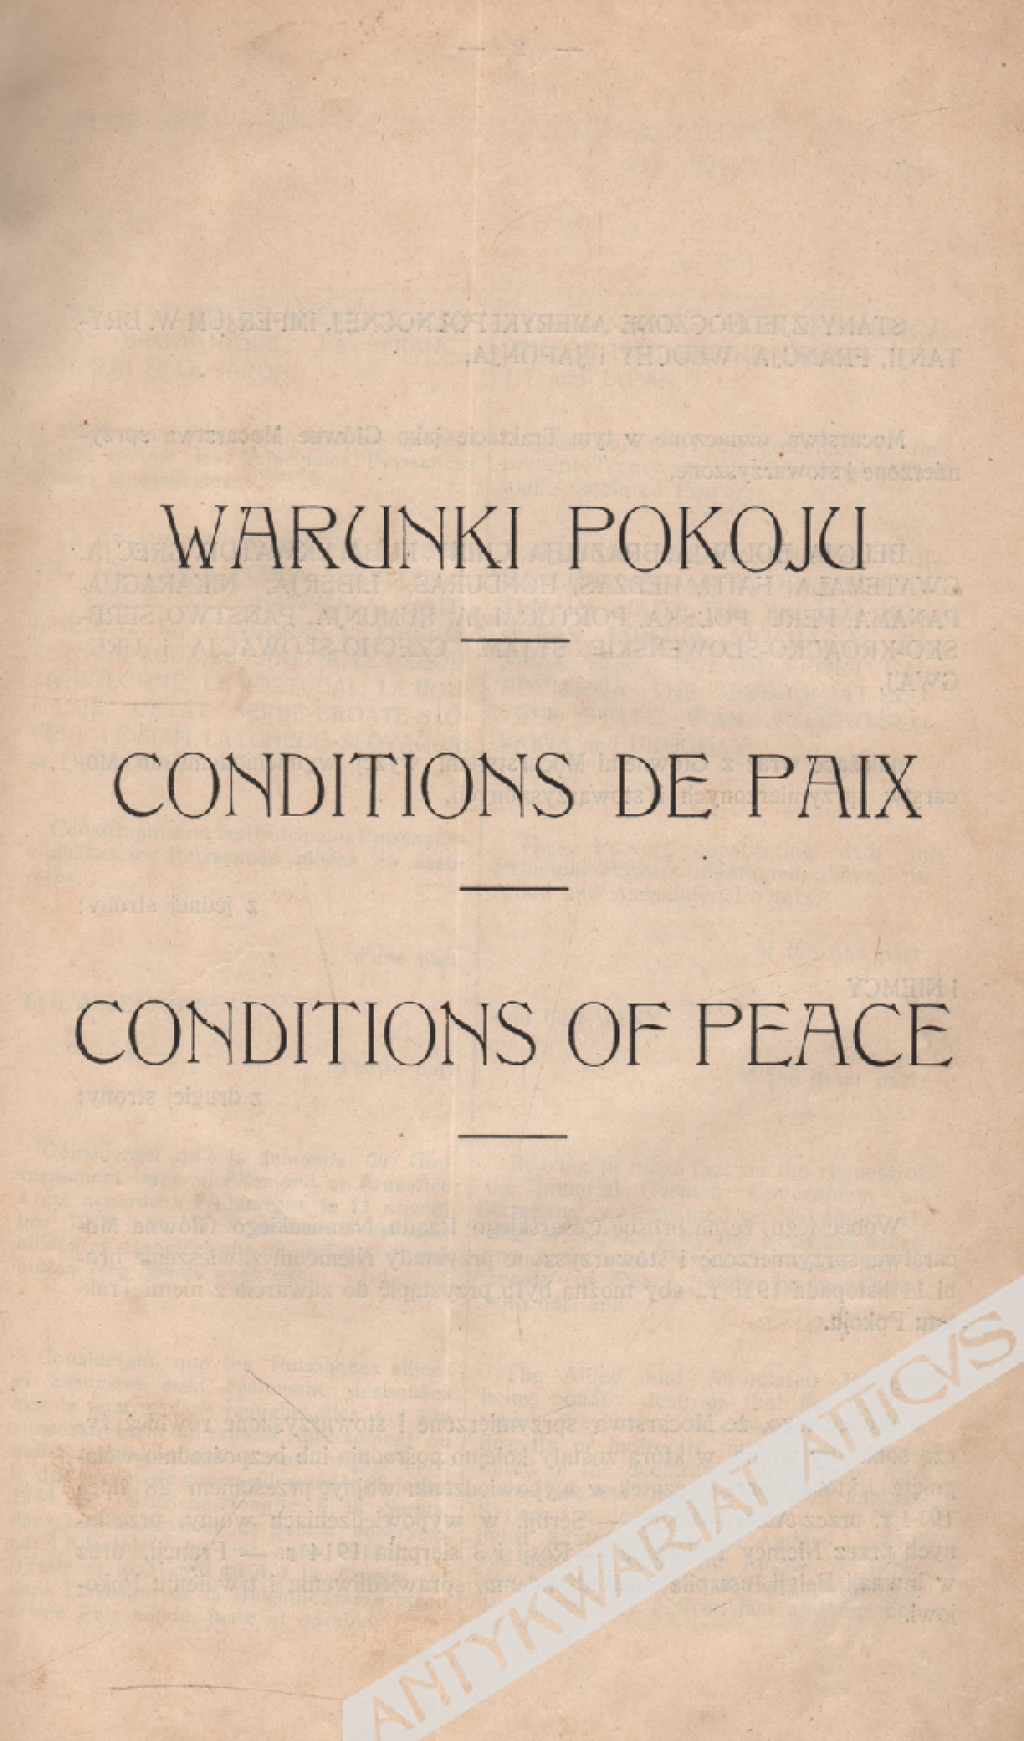 Warunki pokoju. Conditions de paix. Conditions of peace